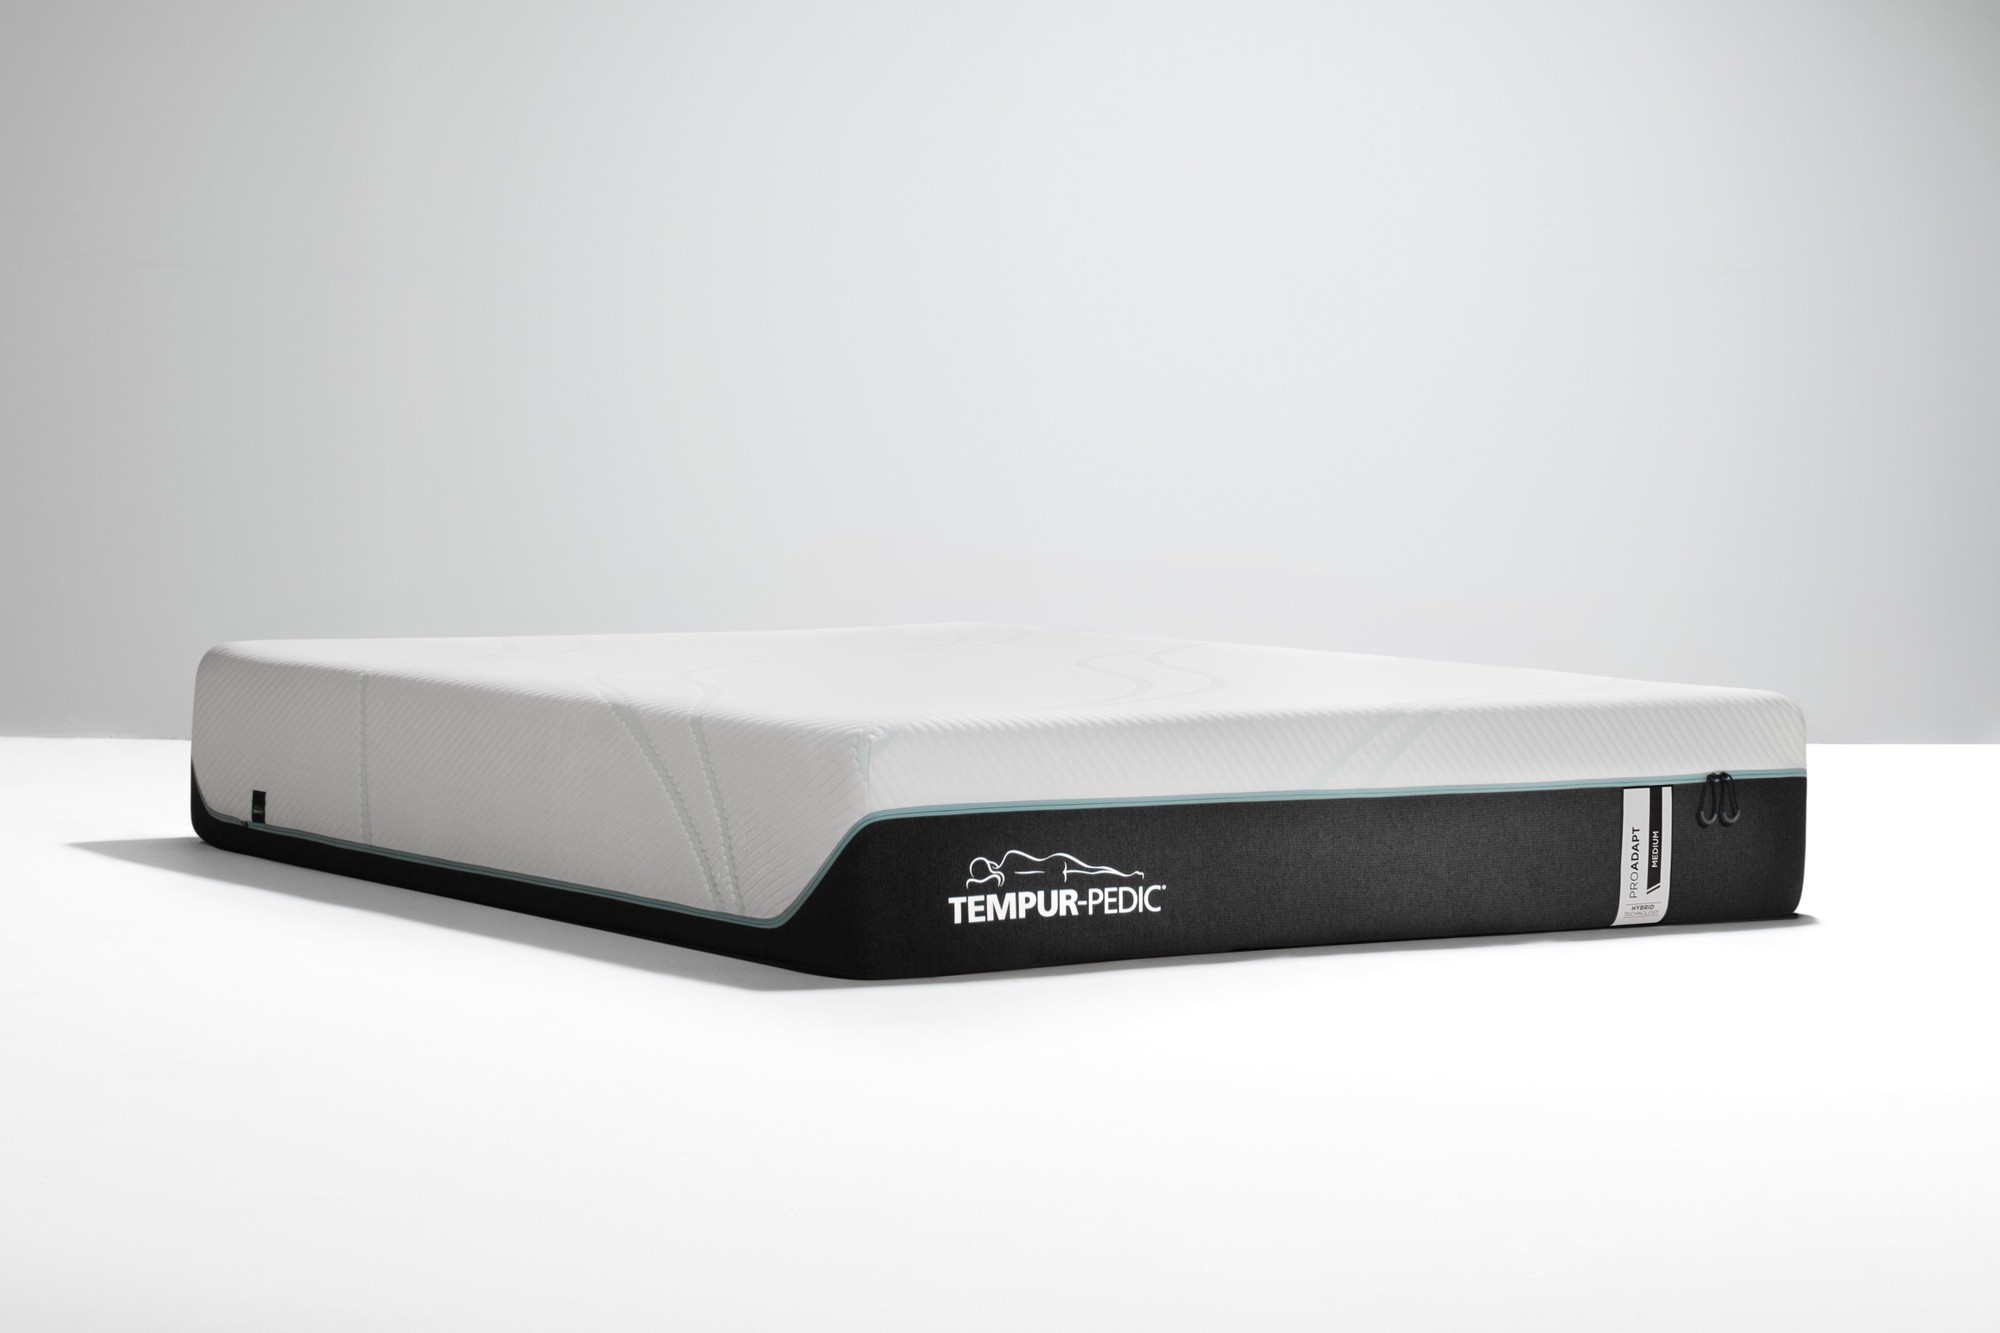 tempur adapt hybrid mattress